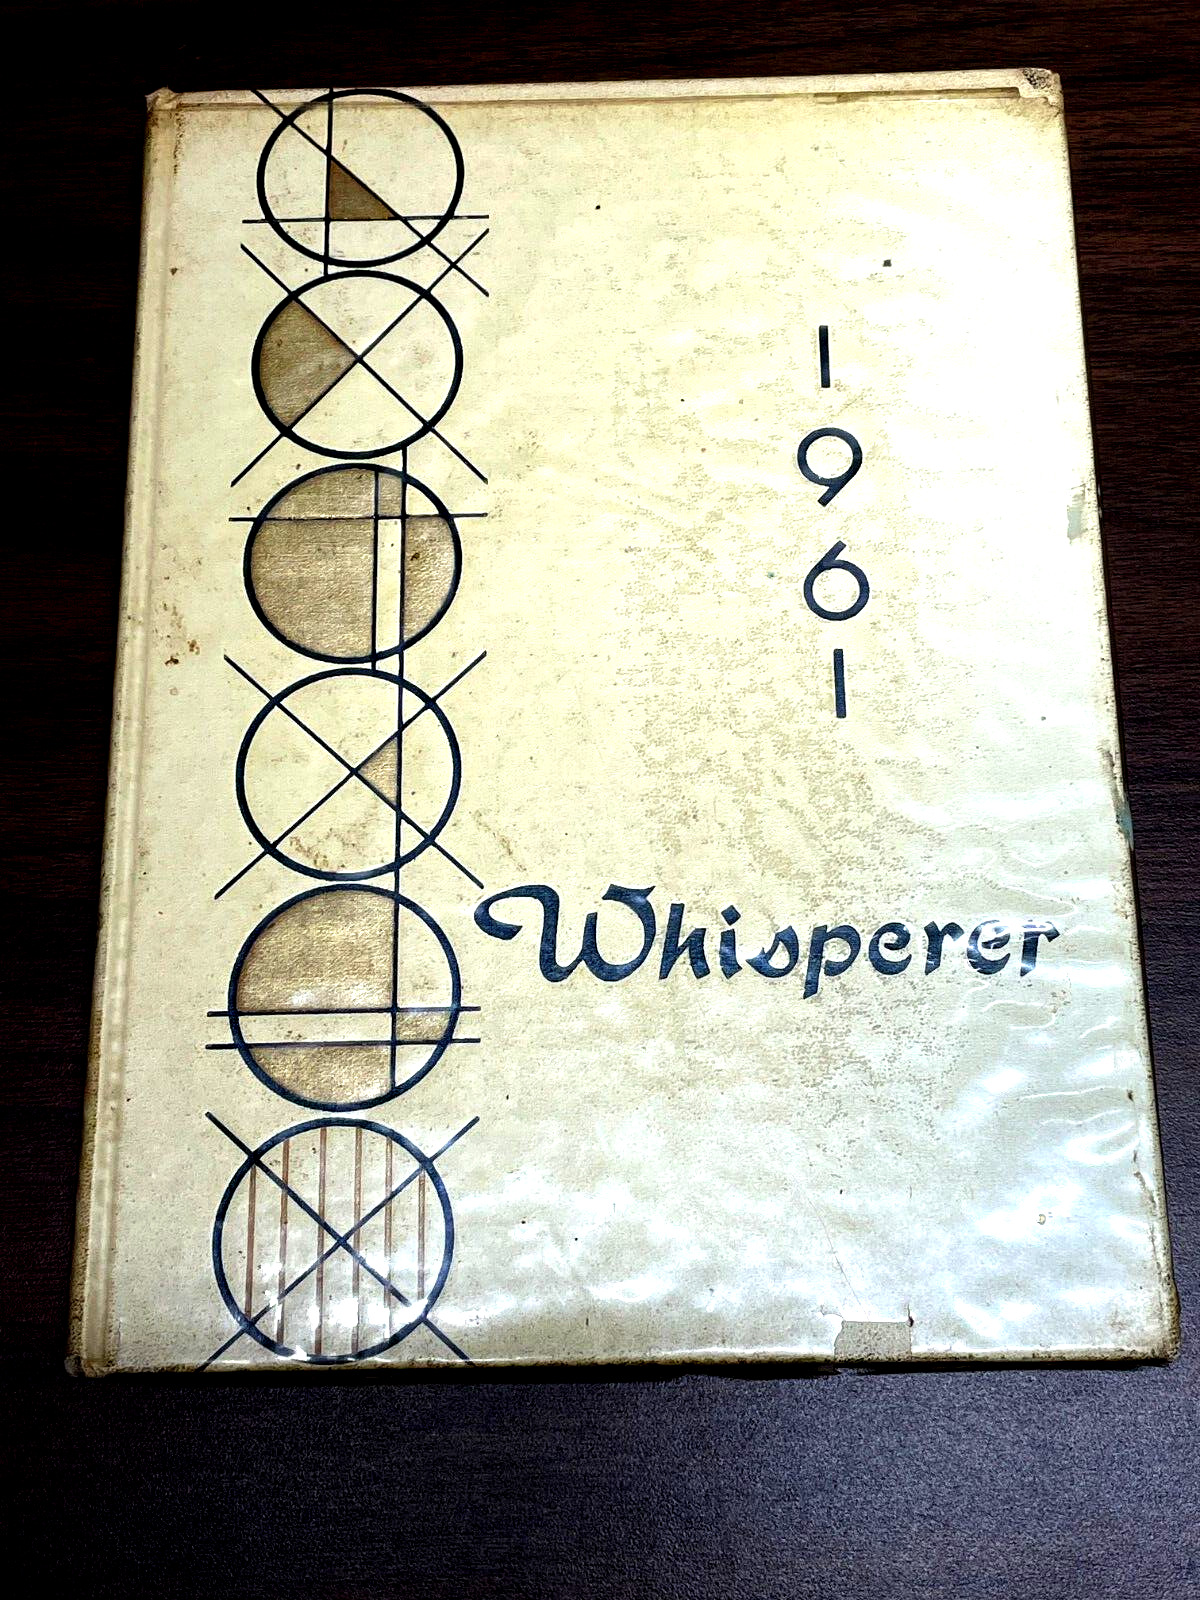 1961 WADSWPRTH SENIOR HIGH SCHOOL YEARBOOK, THE WHISPERER, WADSWORTH, OHIO